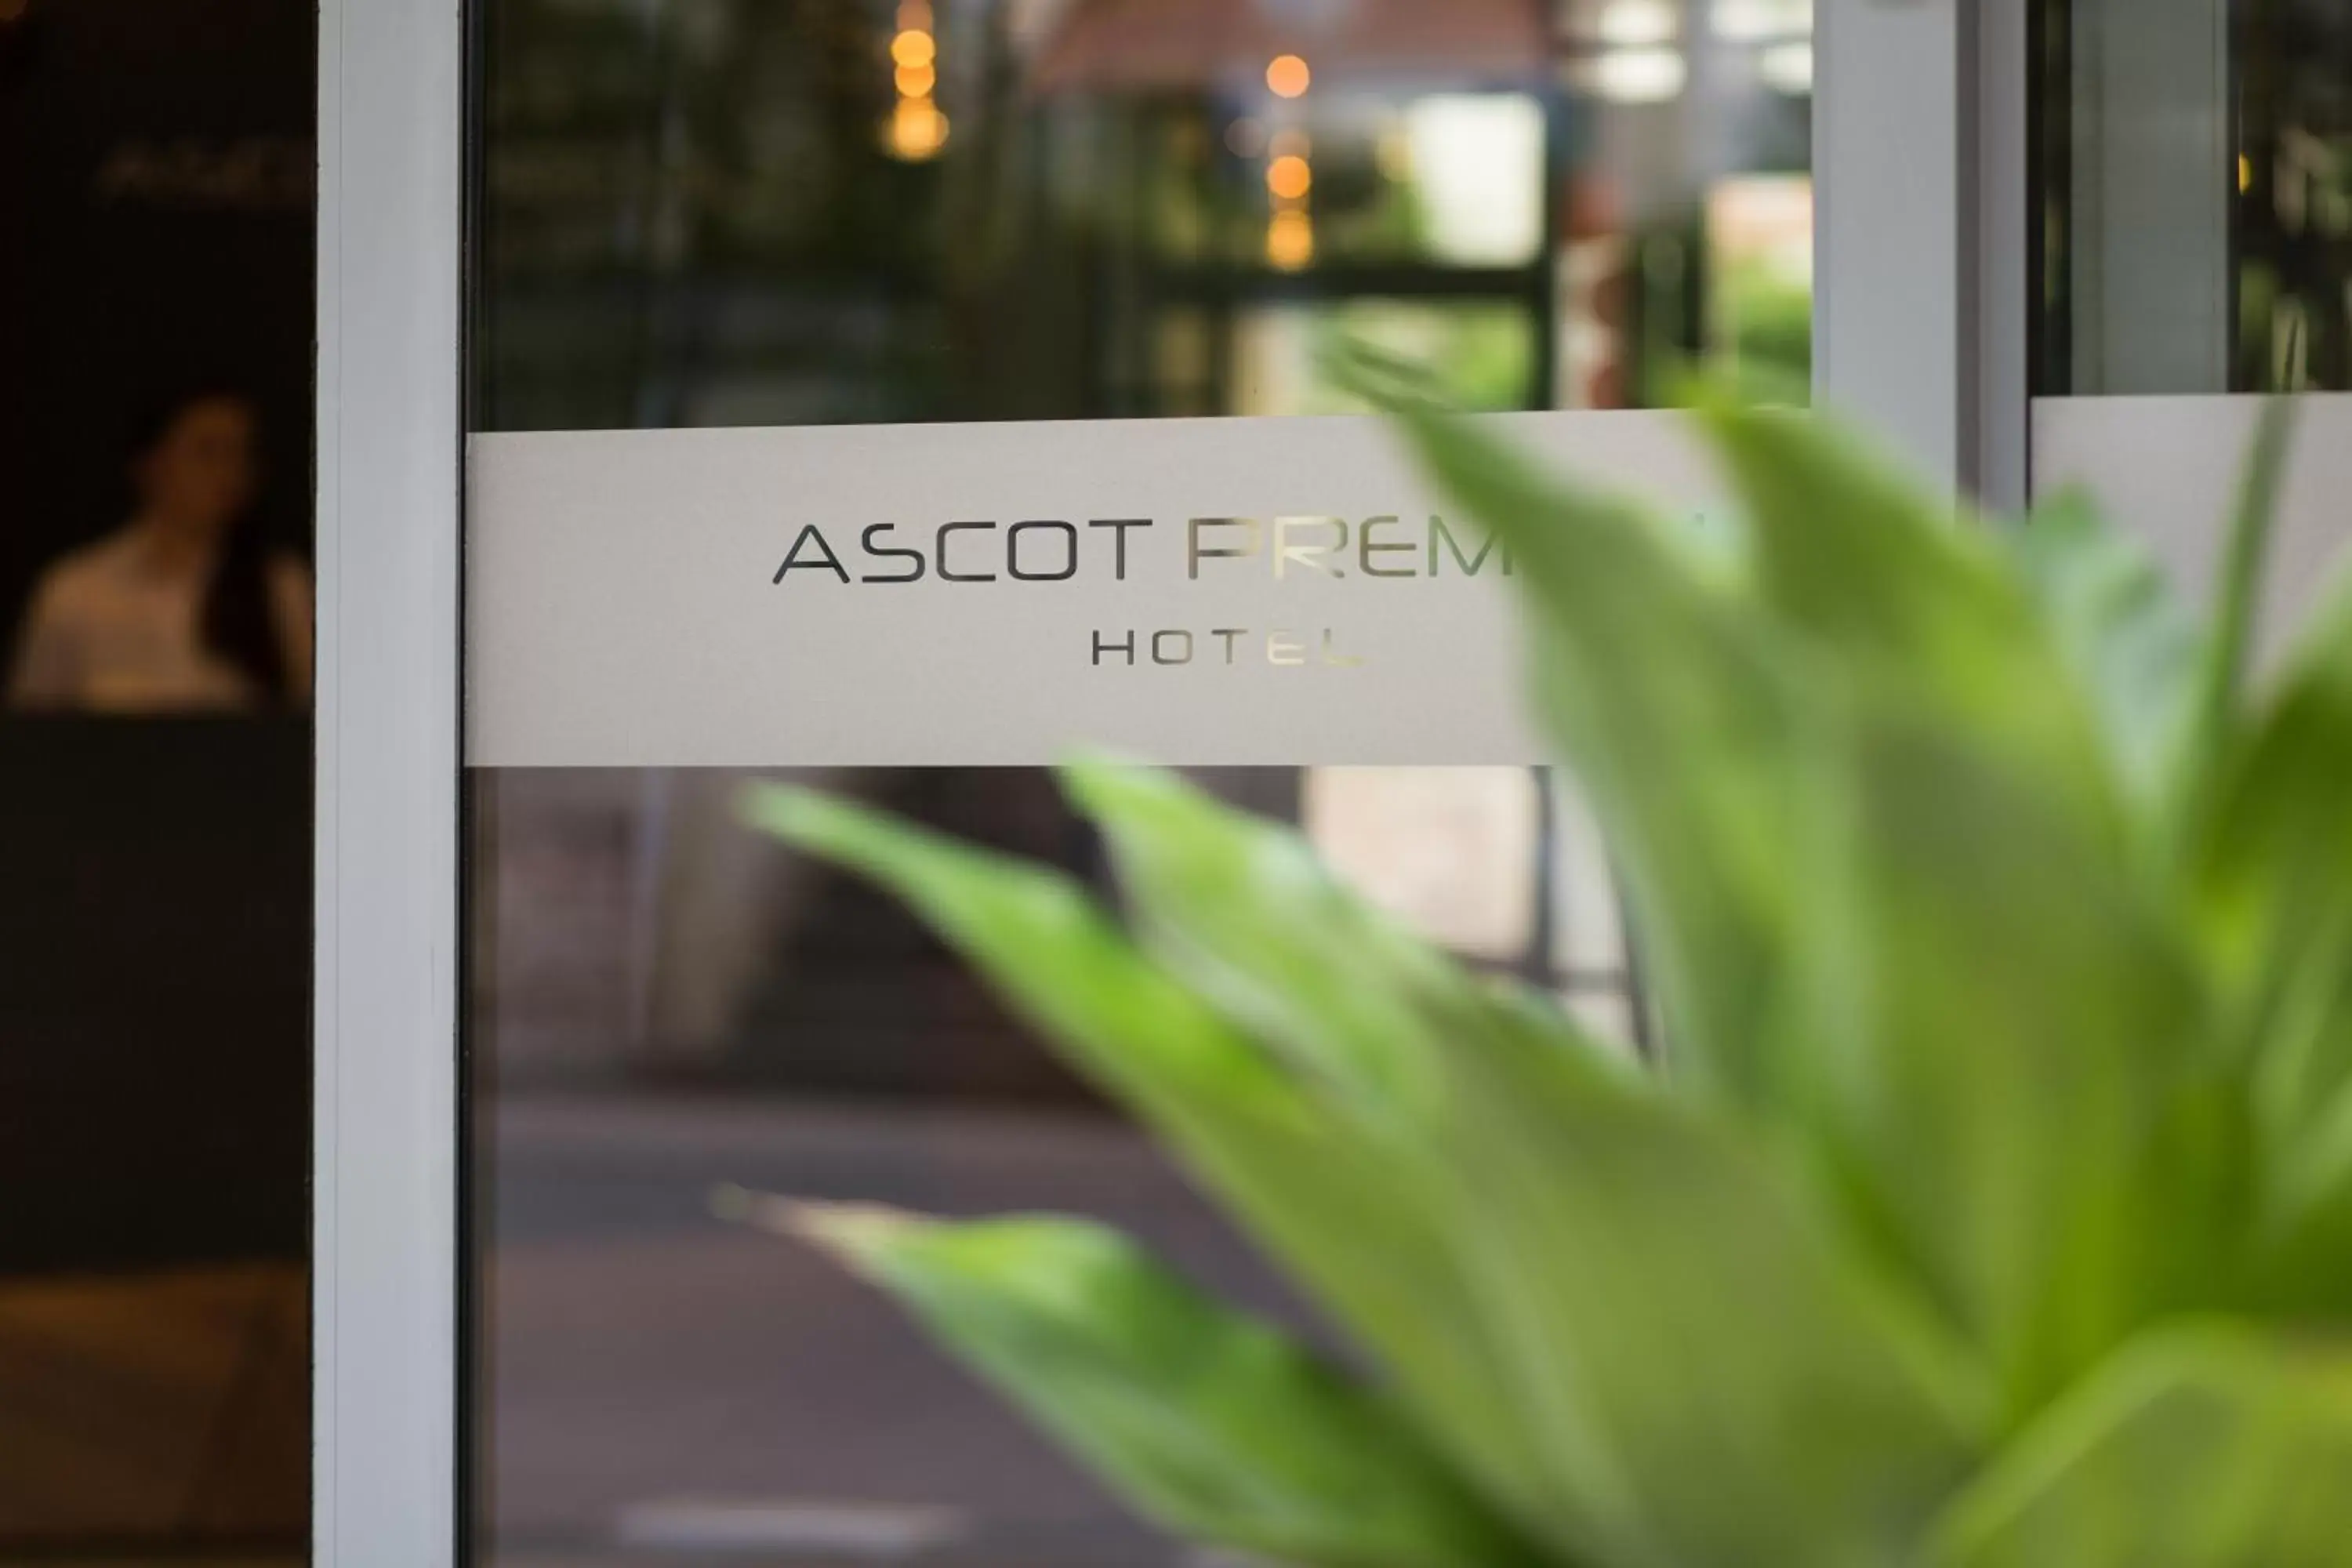 Staff in Ascot Premium Hotel